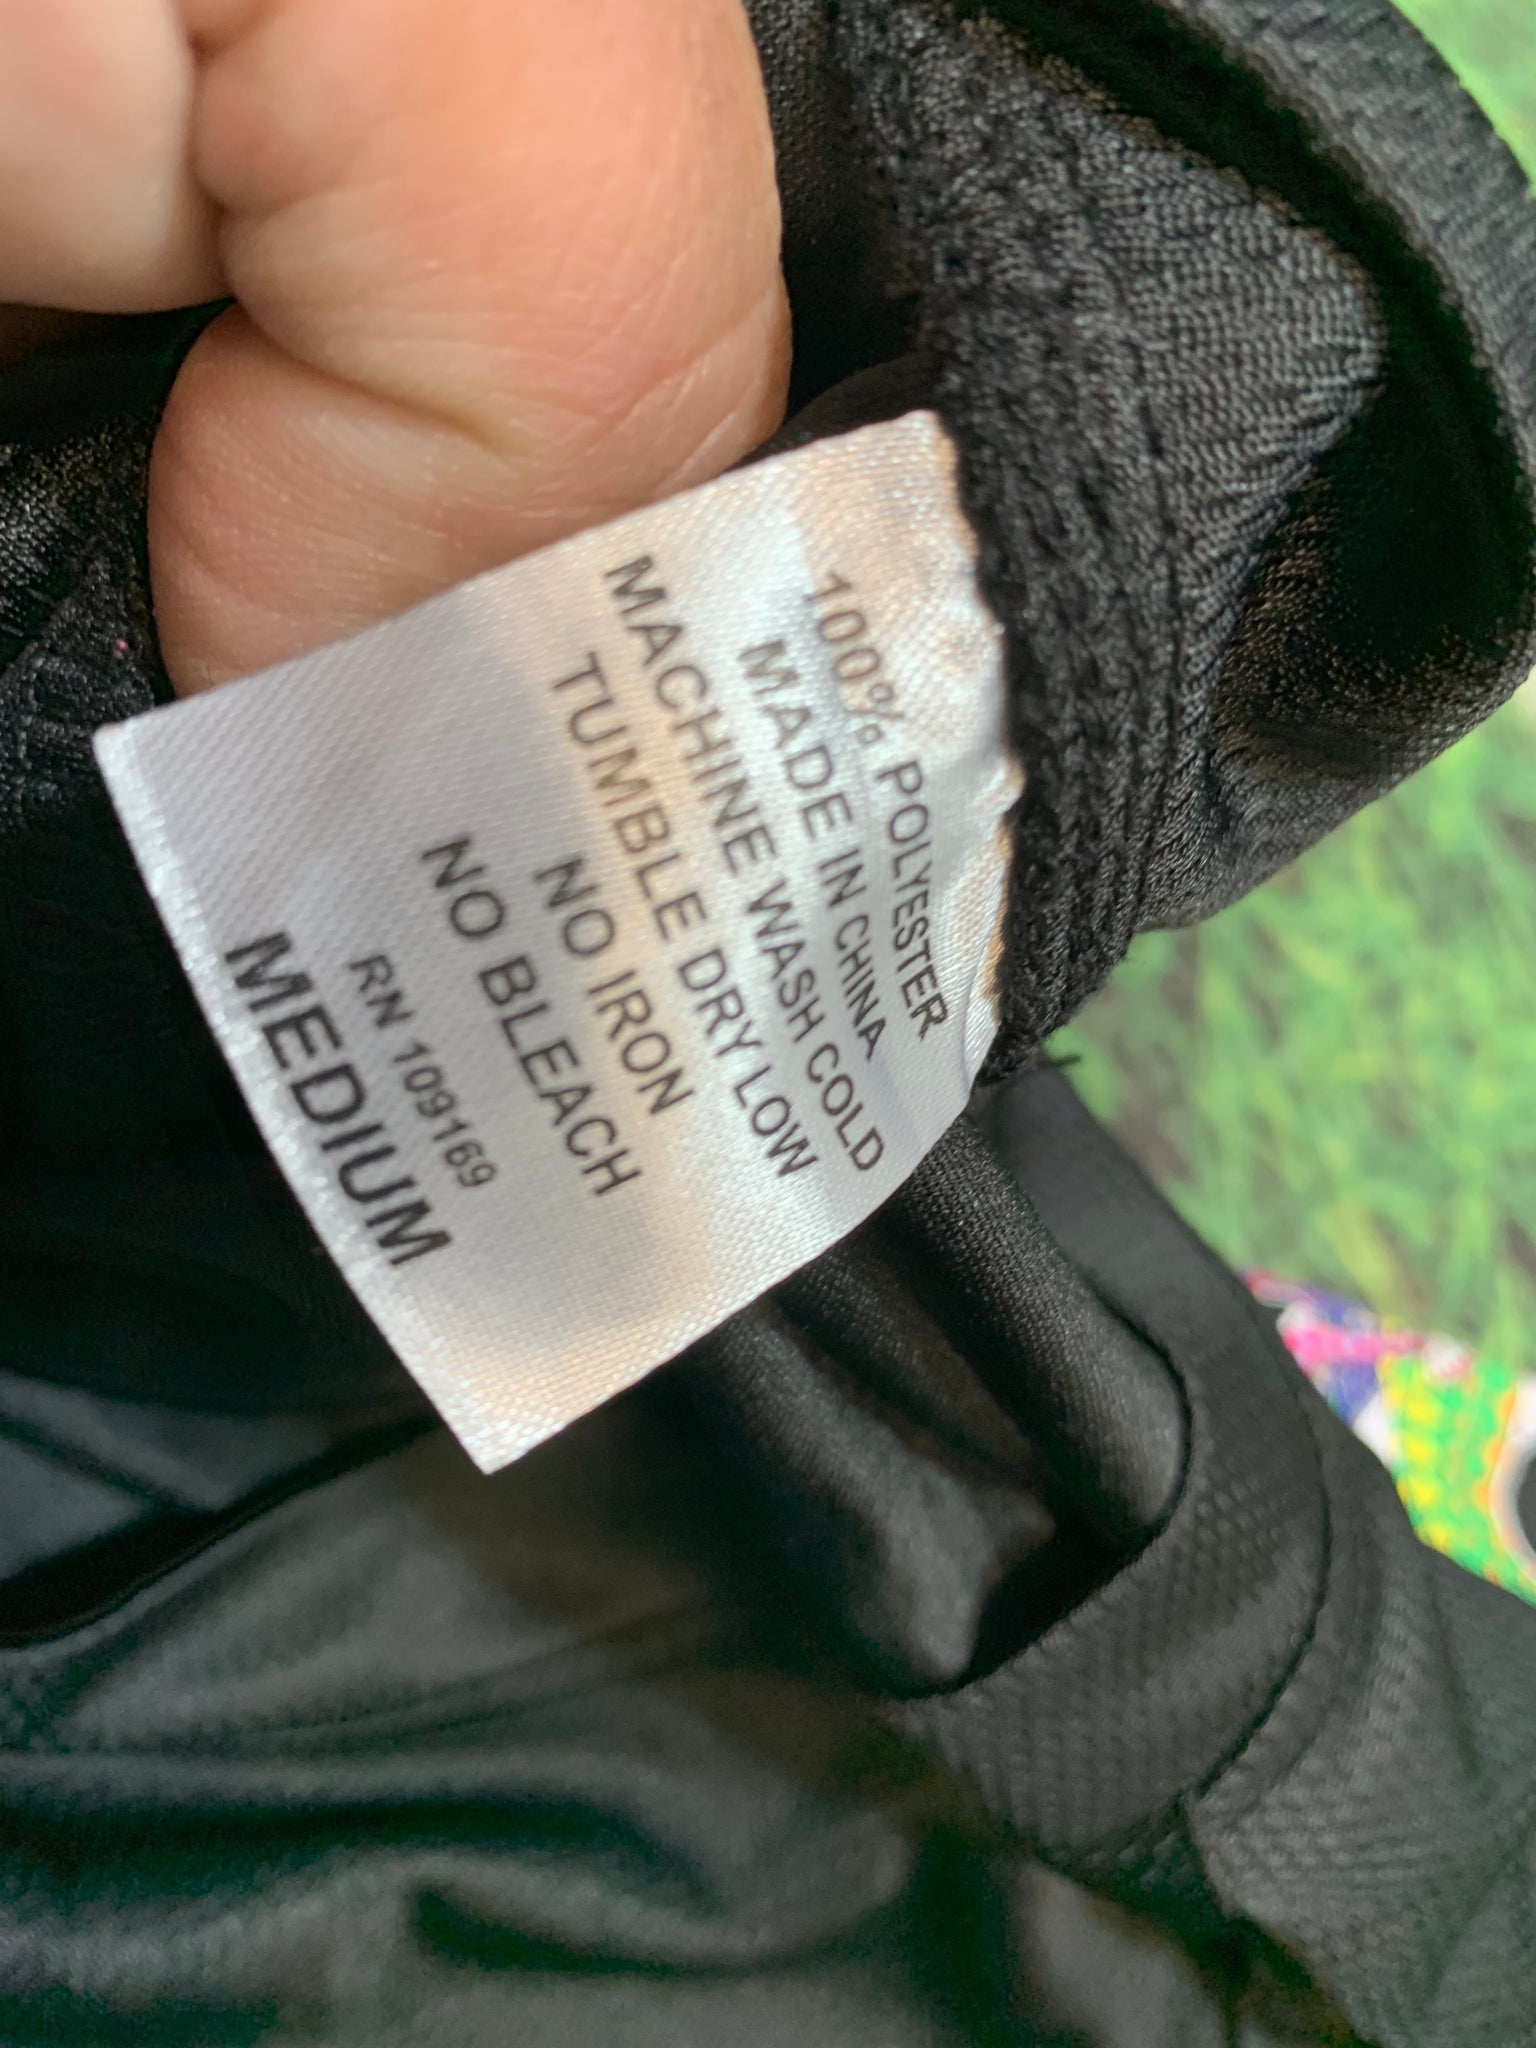 San Jose Sharks SGA LOS TIBURONES Shirsey M 10/19/2019 Jersey Shirt Giveaway